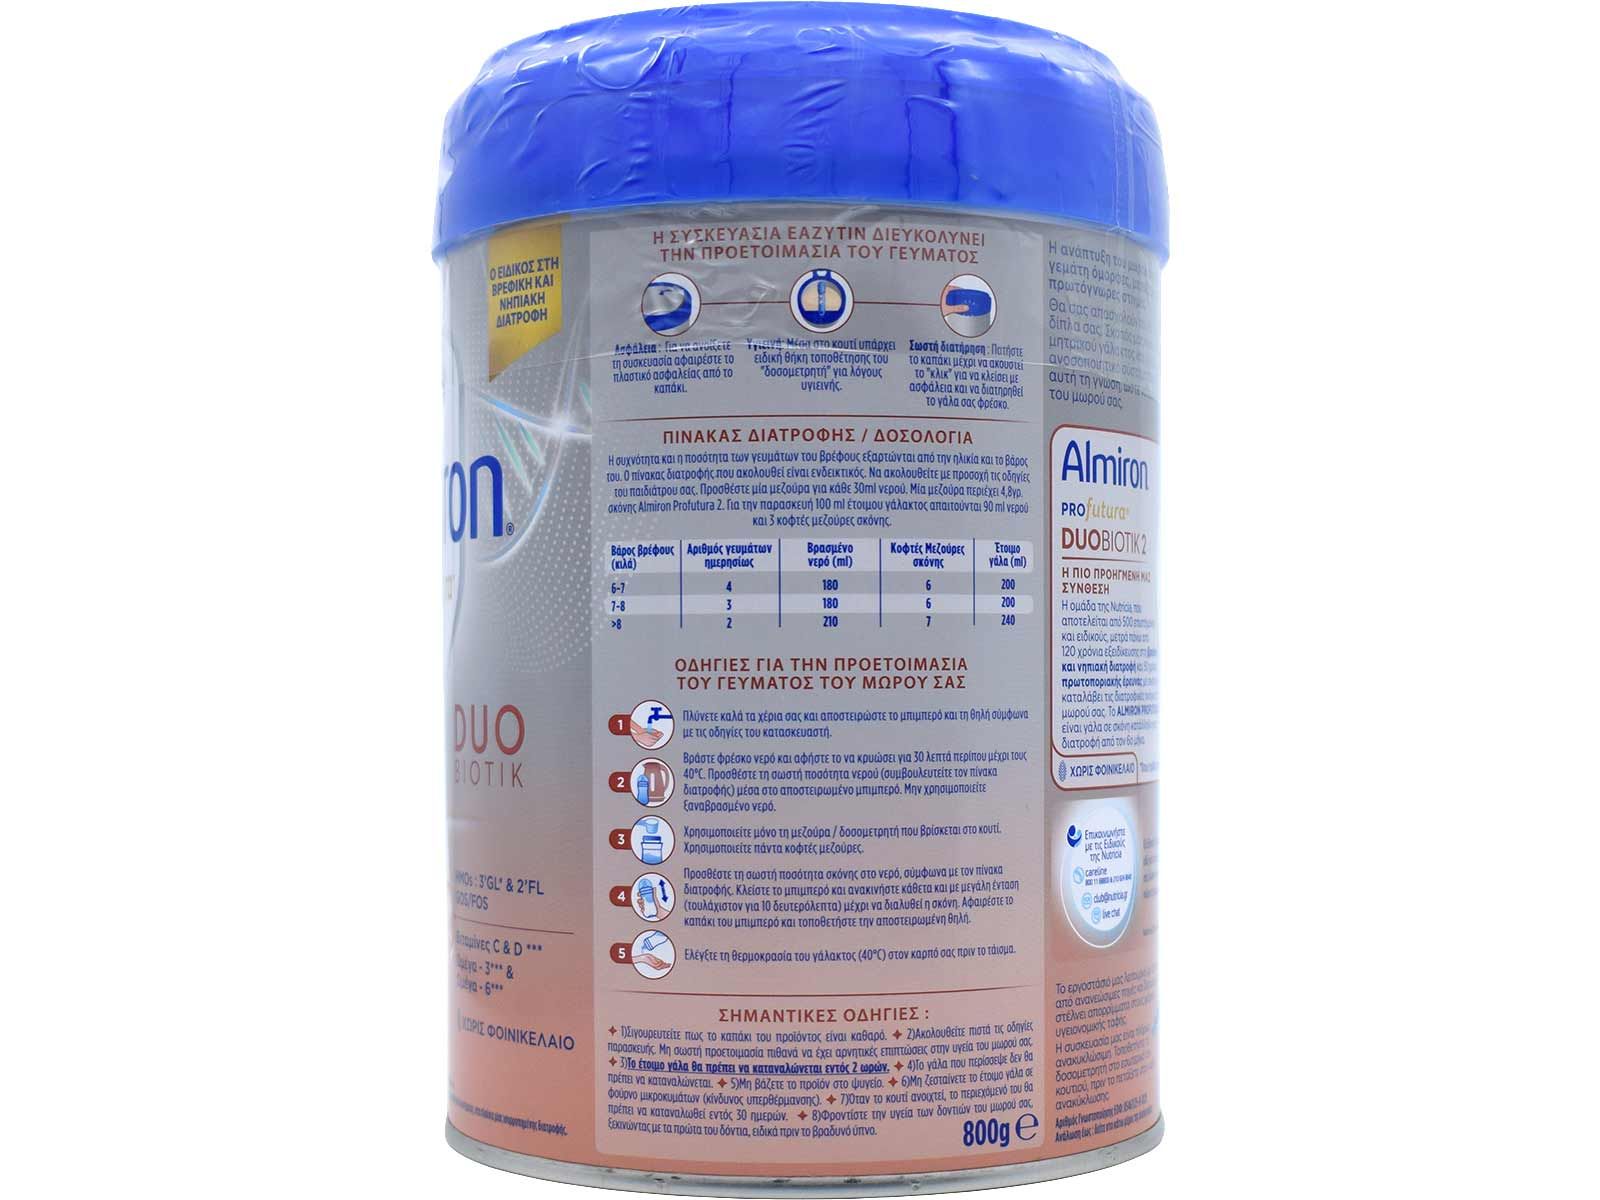 Nutricia Almiron Profutura 2 (6-12m) Milk Powder 800gr